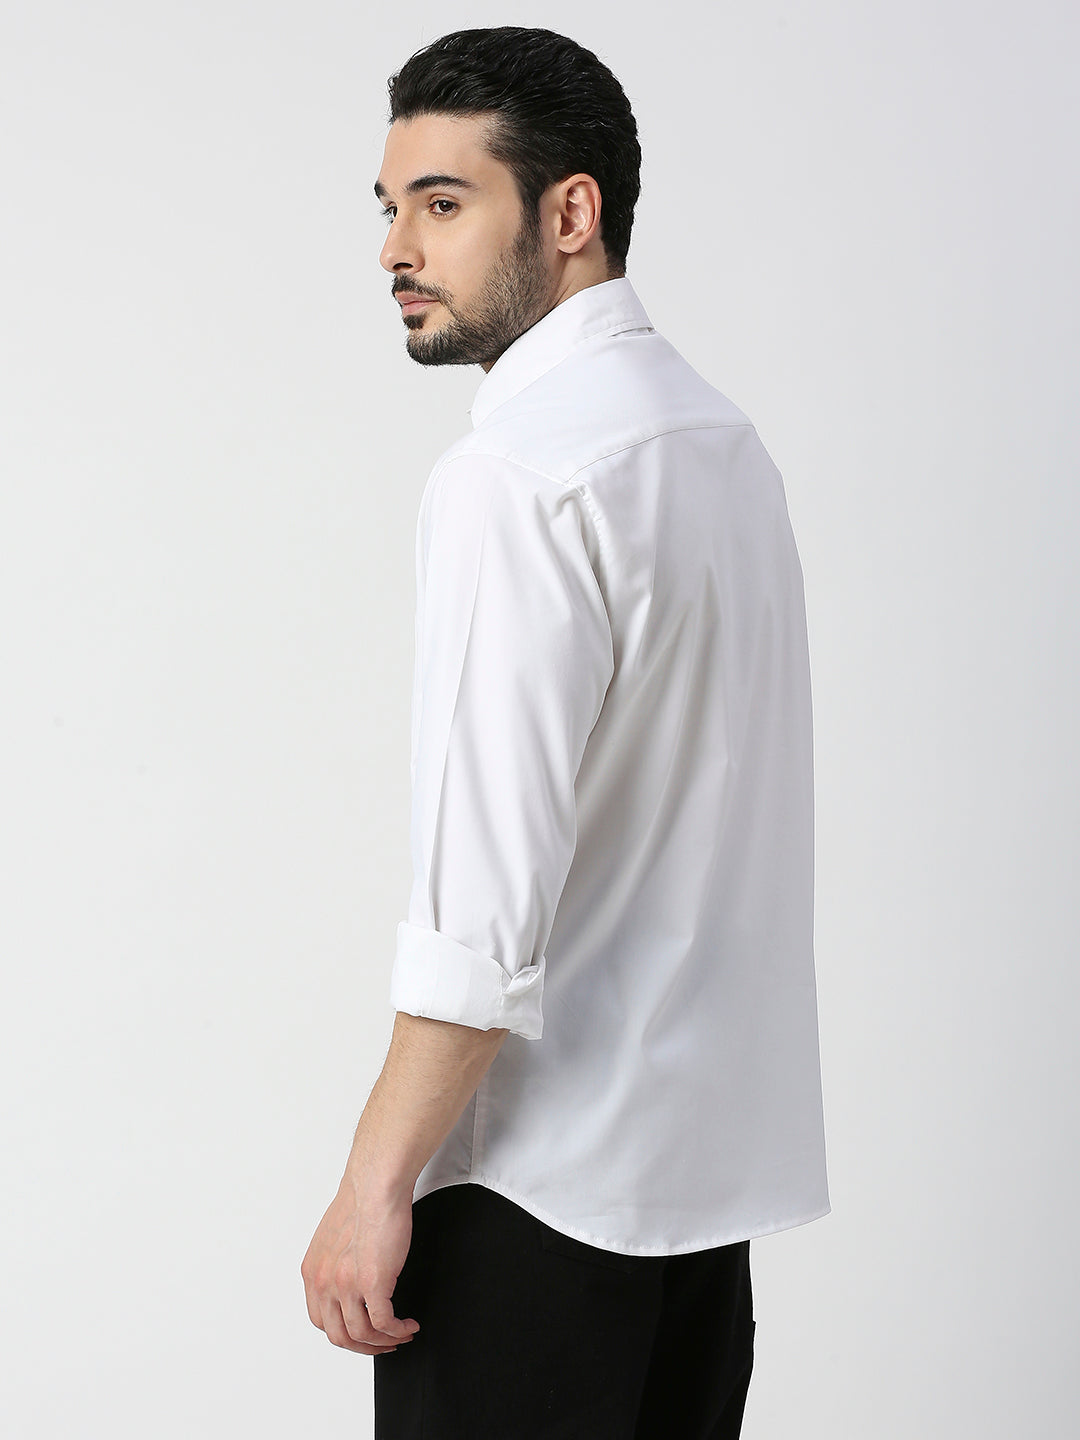 Buy Blamblack White colour solid oversized shirt.